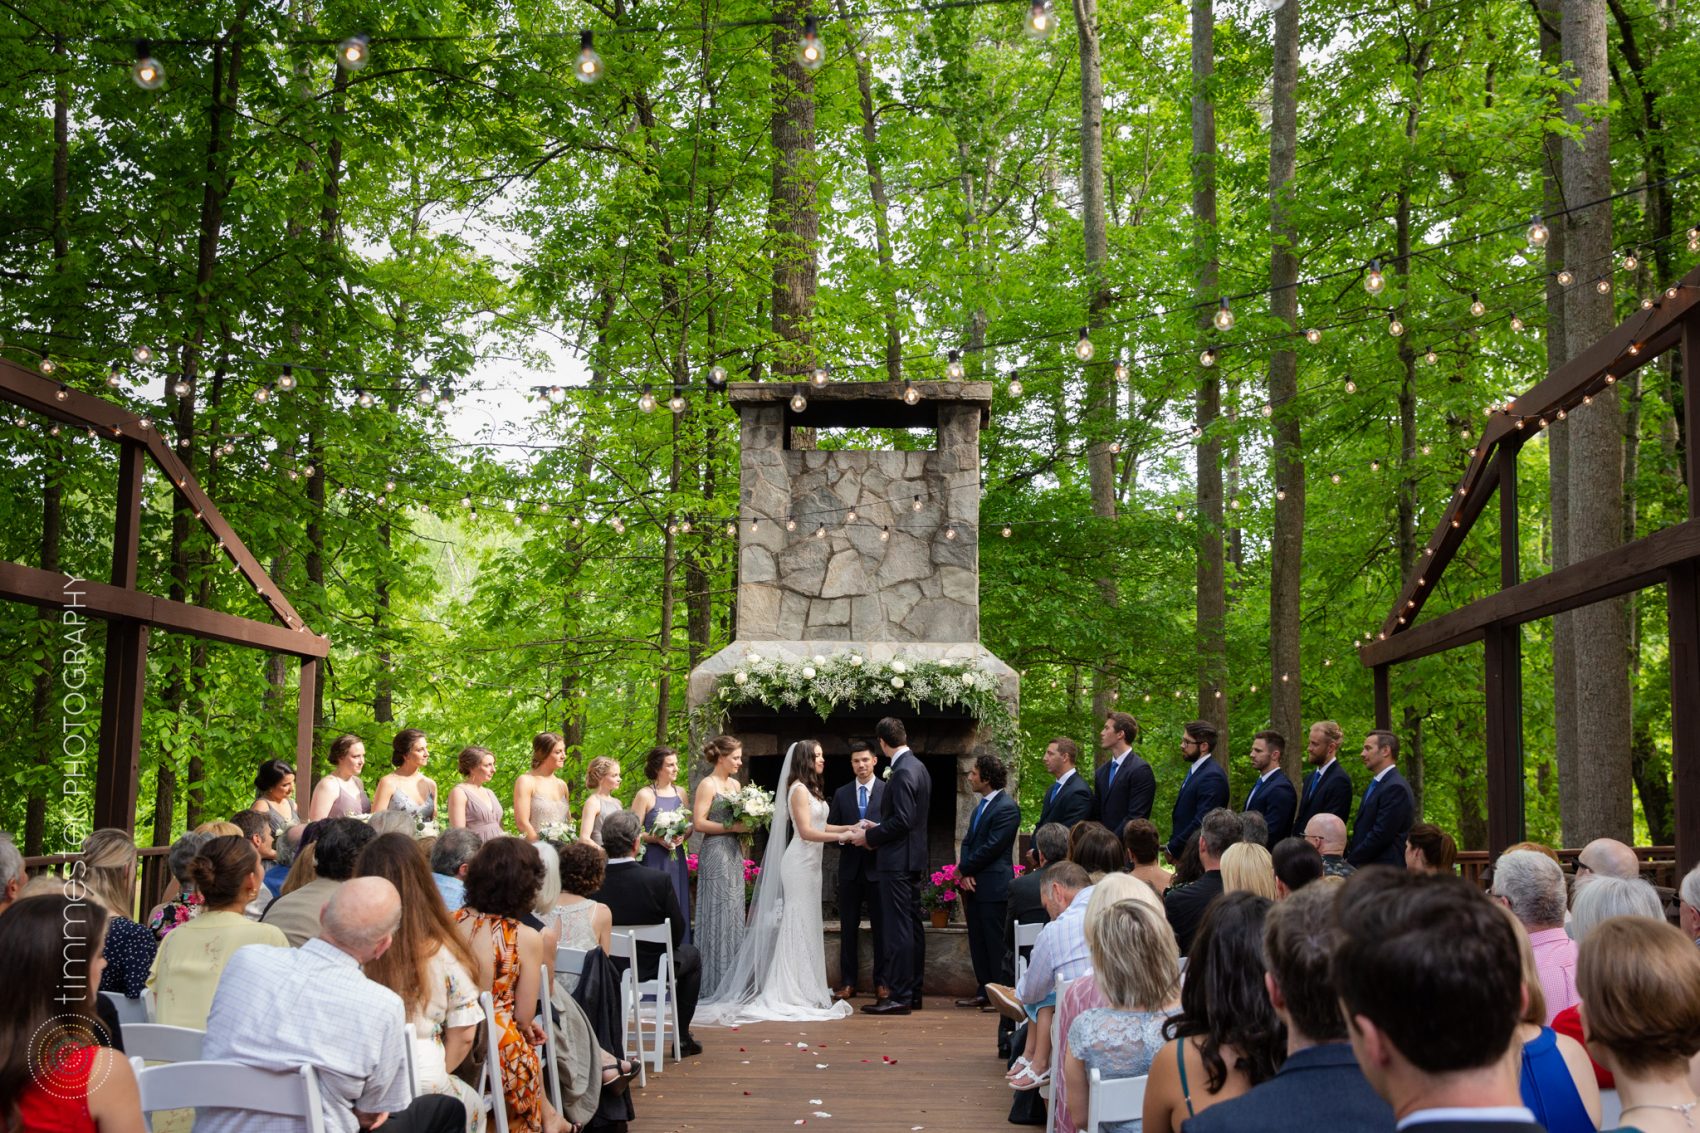 A North Carolina outdoor wedding ceremony at the Barn at Valhalla.